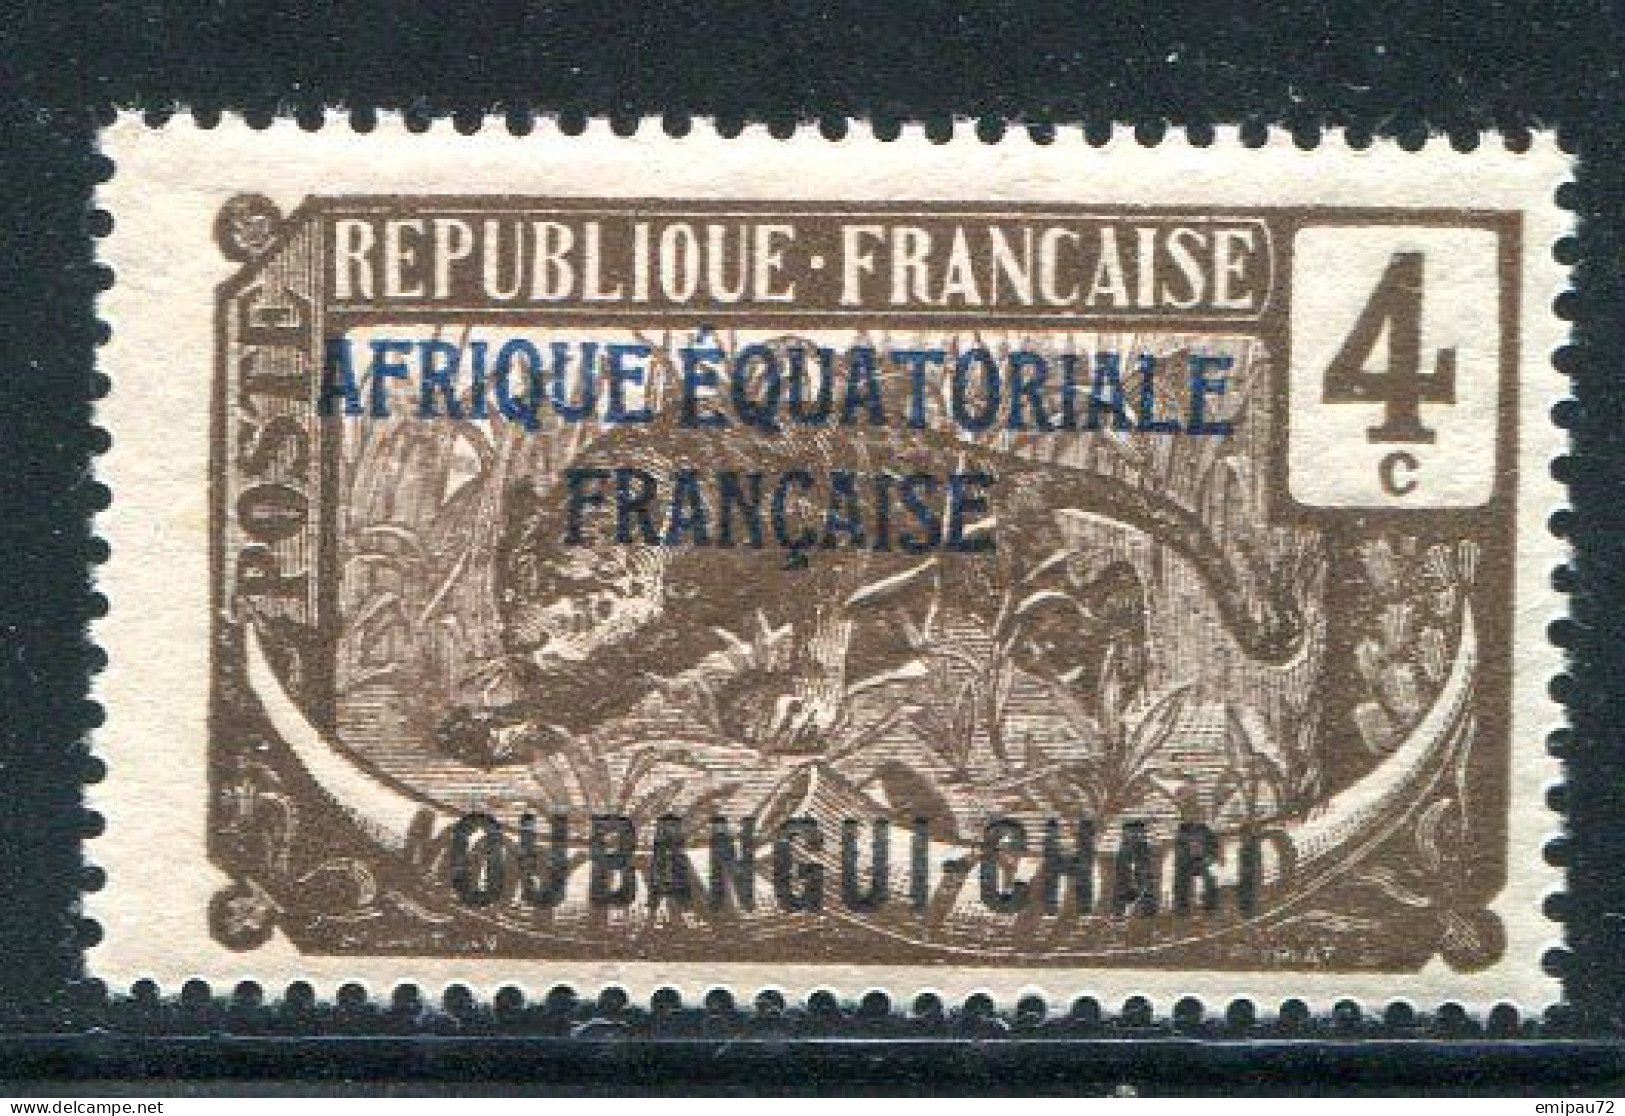 OUBANGUI- Y&T N°45- Neuf Sans Charnière ** - Unused Stamps